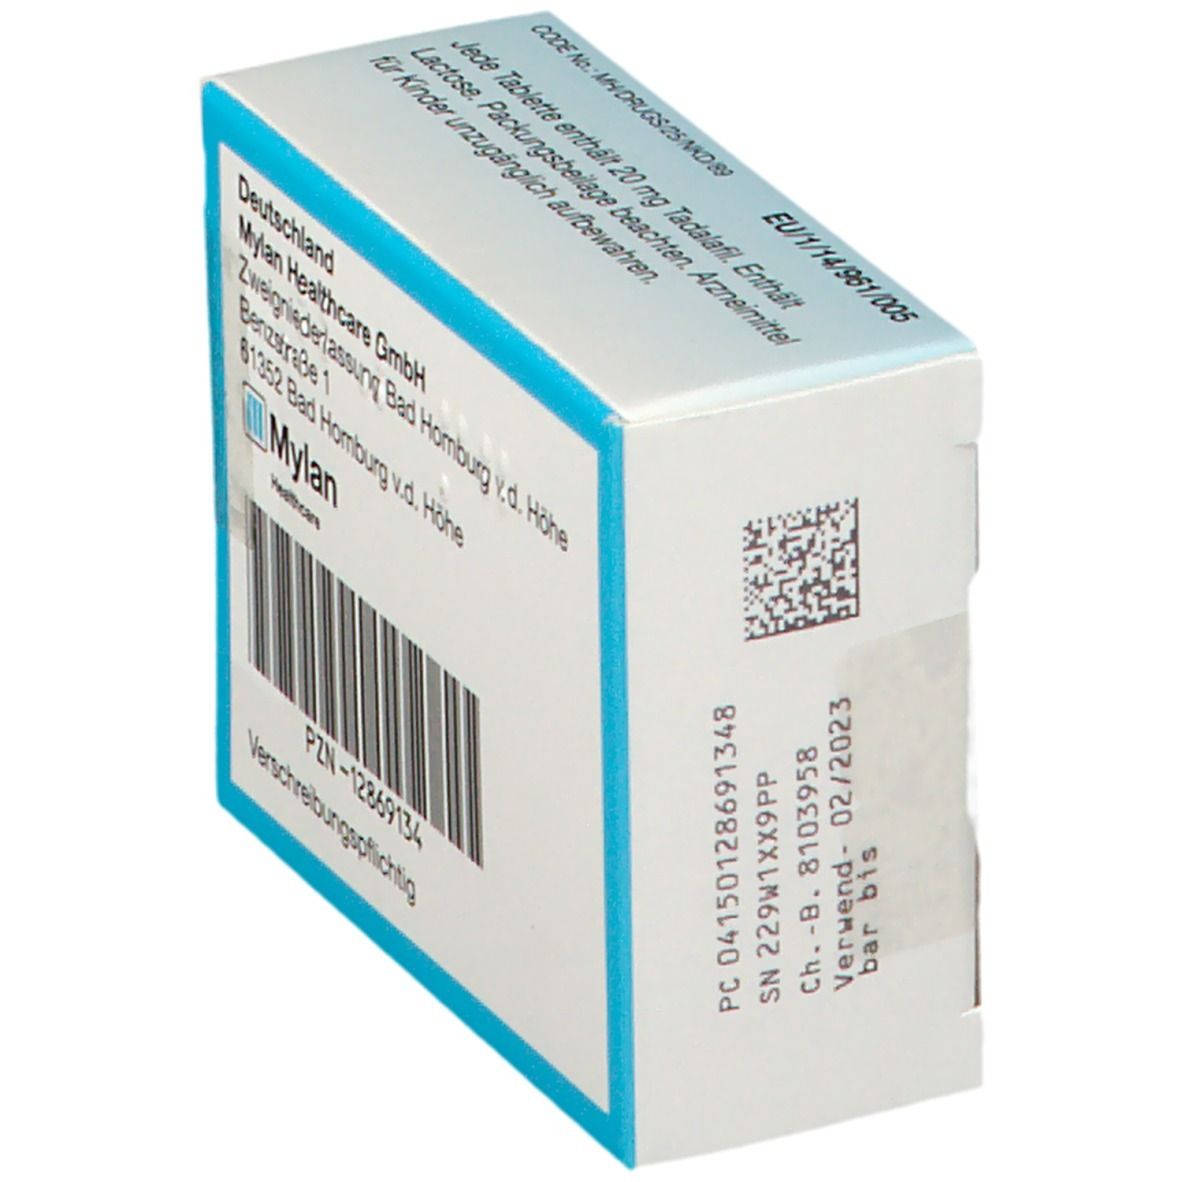 Tadalafil Mylan 20 mg